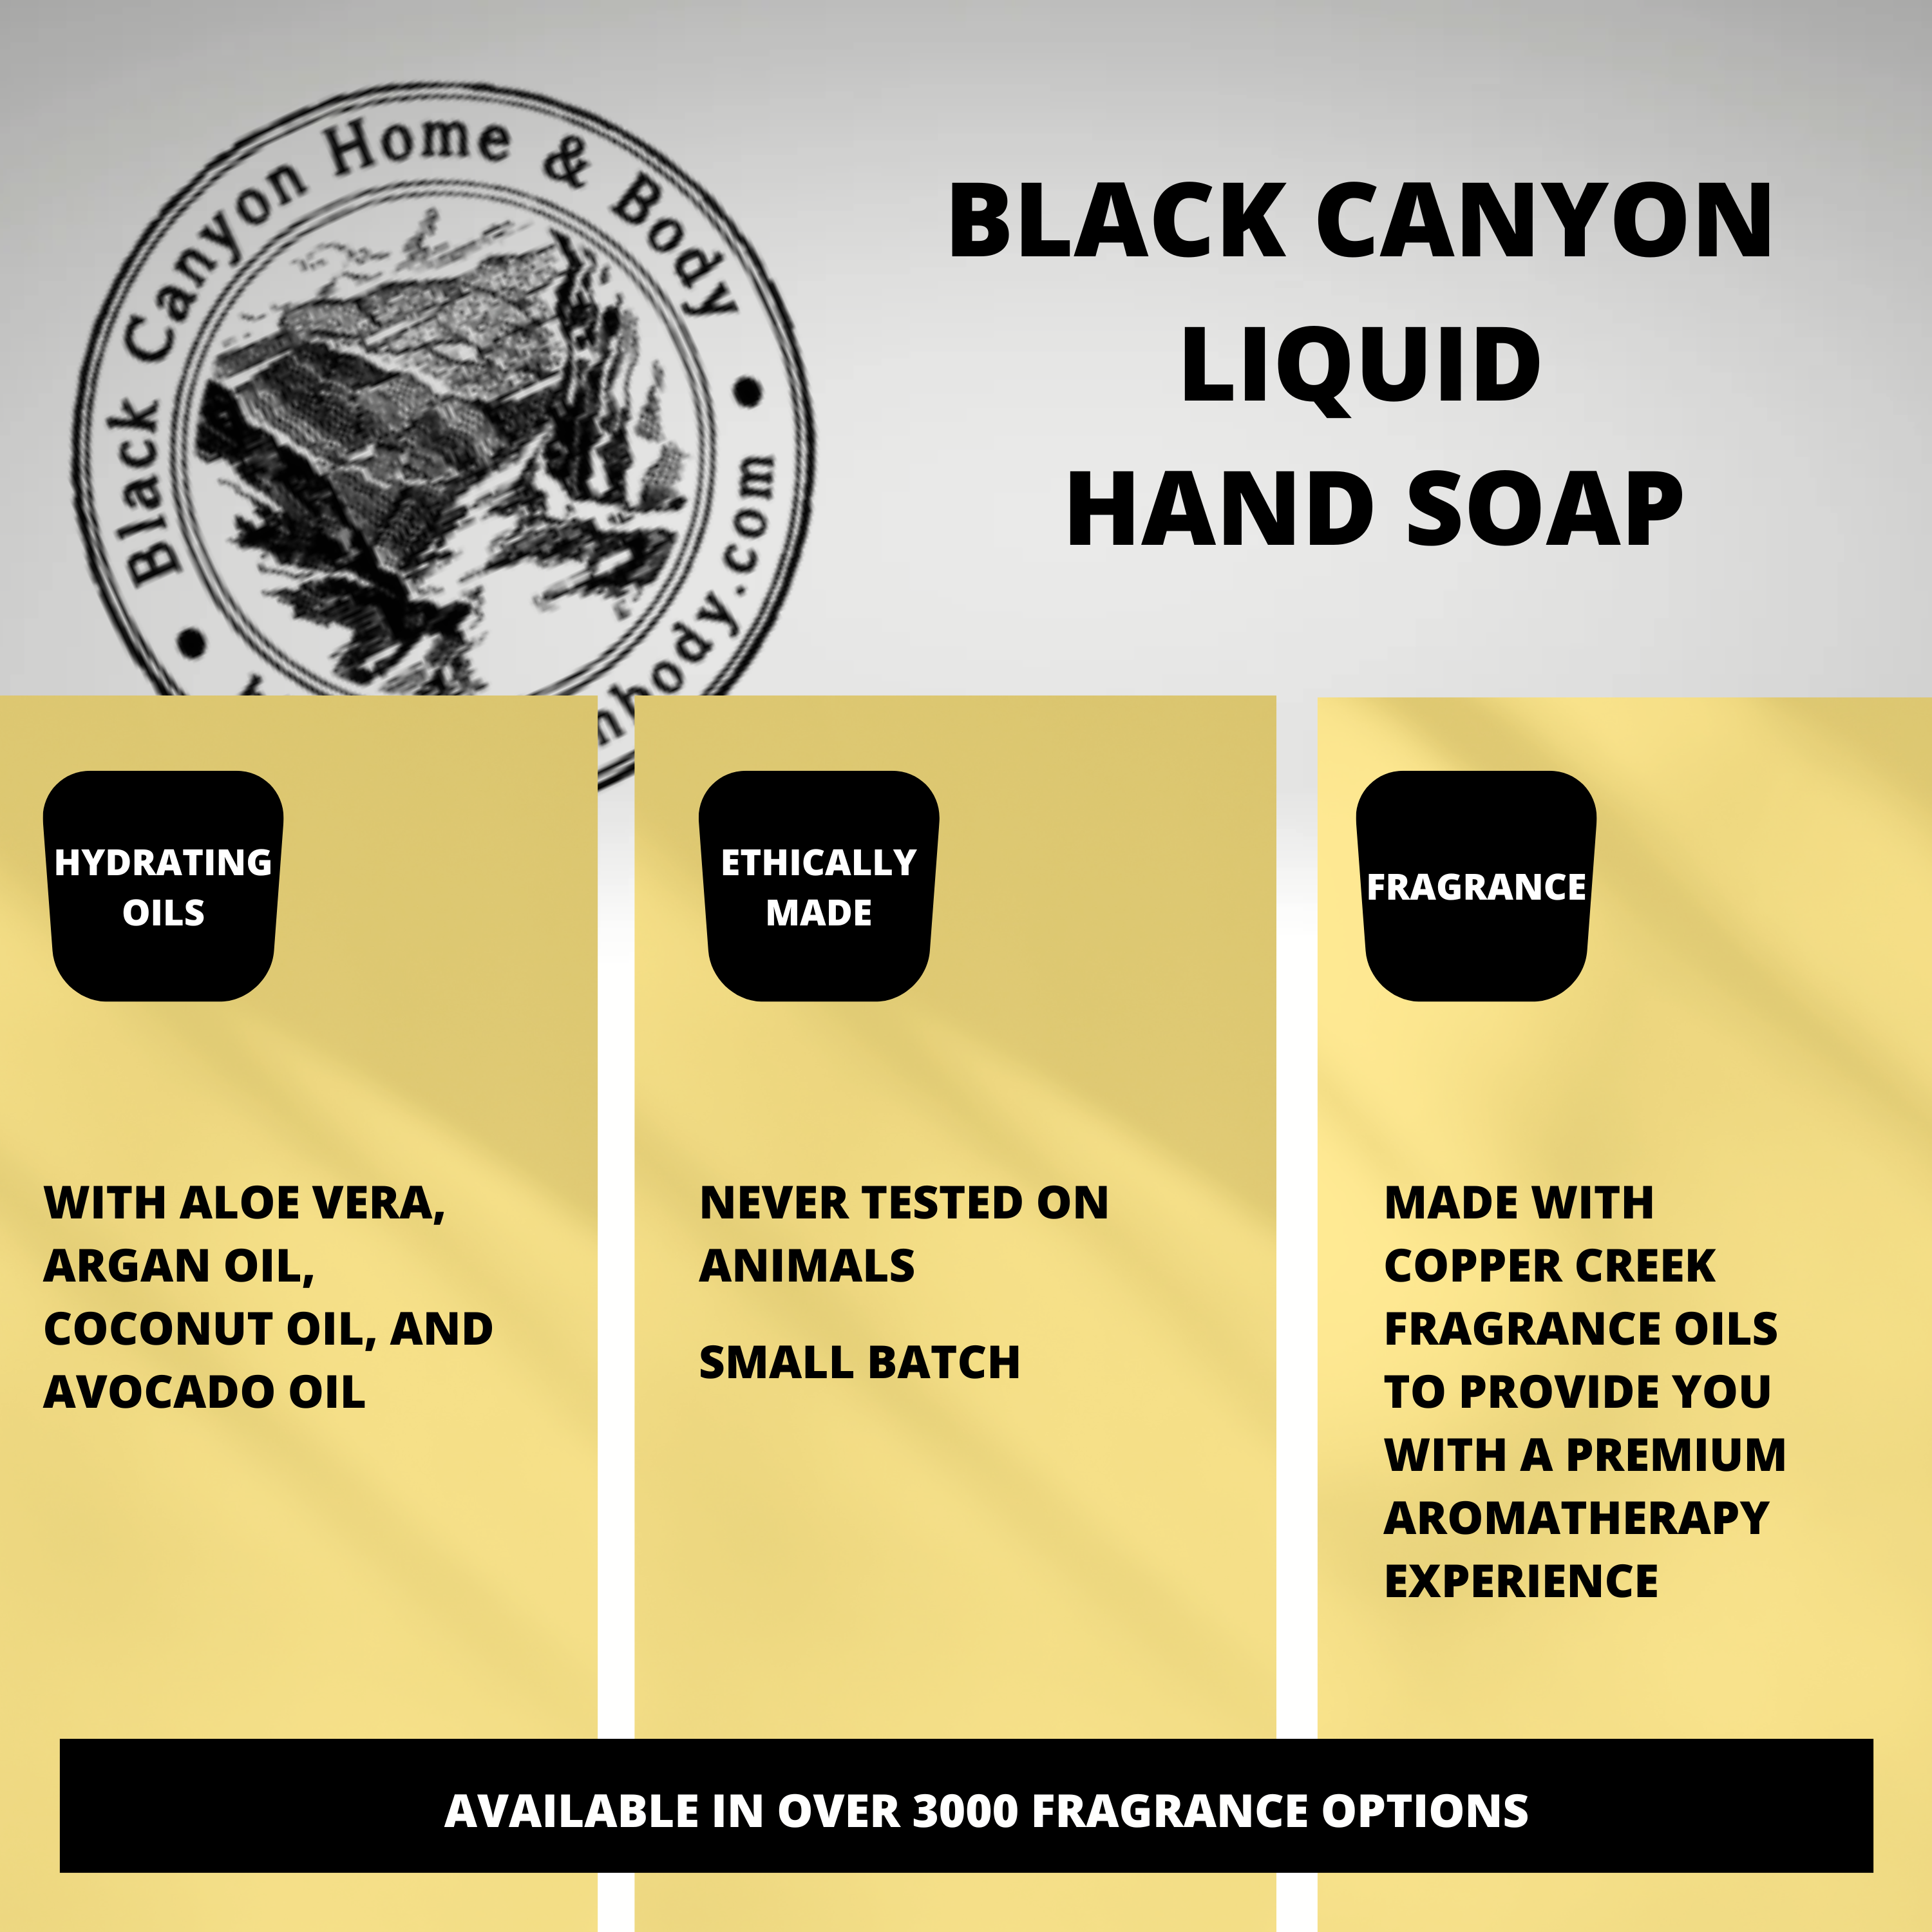 Black Canyon Black Currant & Rose Scented Liquid Hand Soap